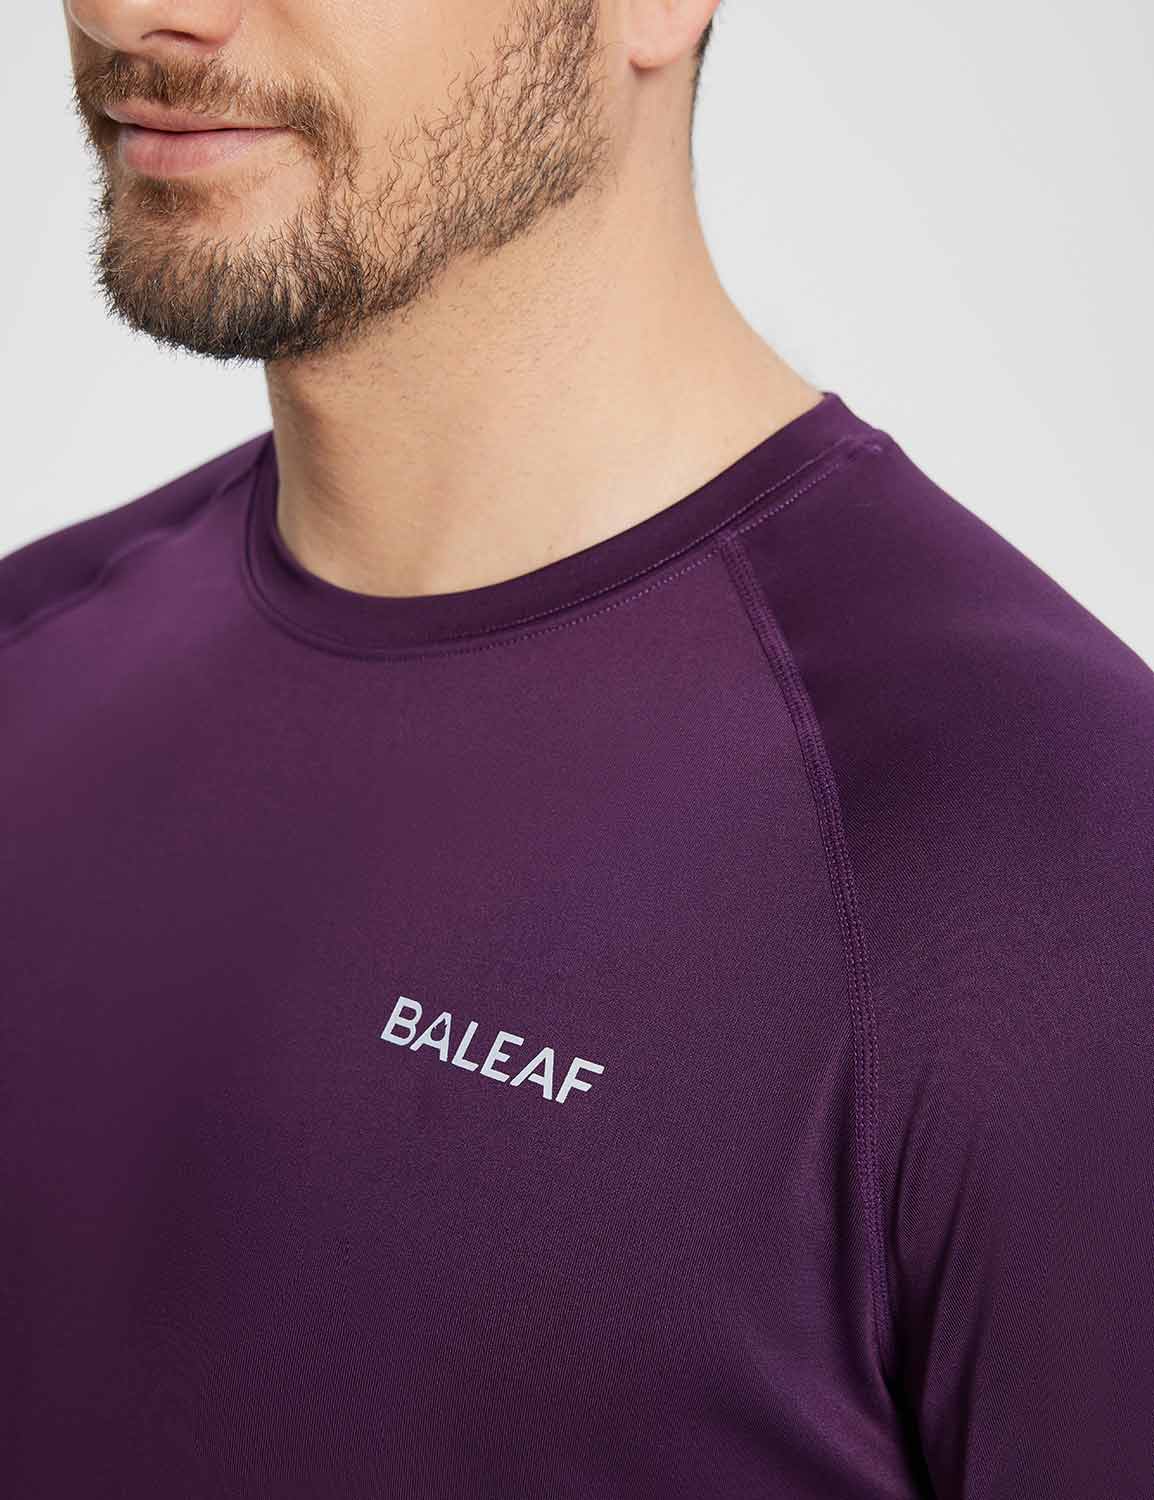 Baleaf Men's Sustainable Long-Sleeve Baselayer Shadow Purple Details